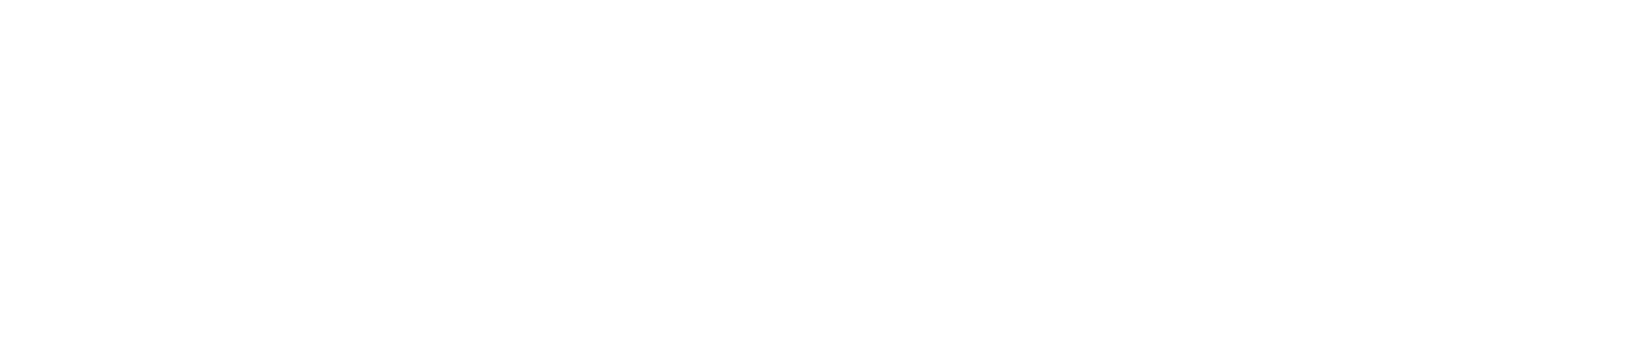 Storz Insurance Services, Inc.